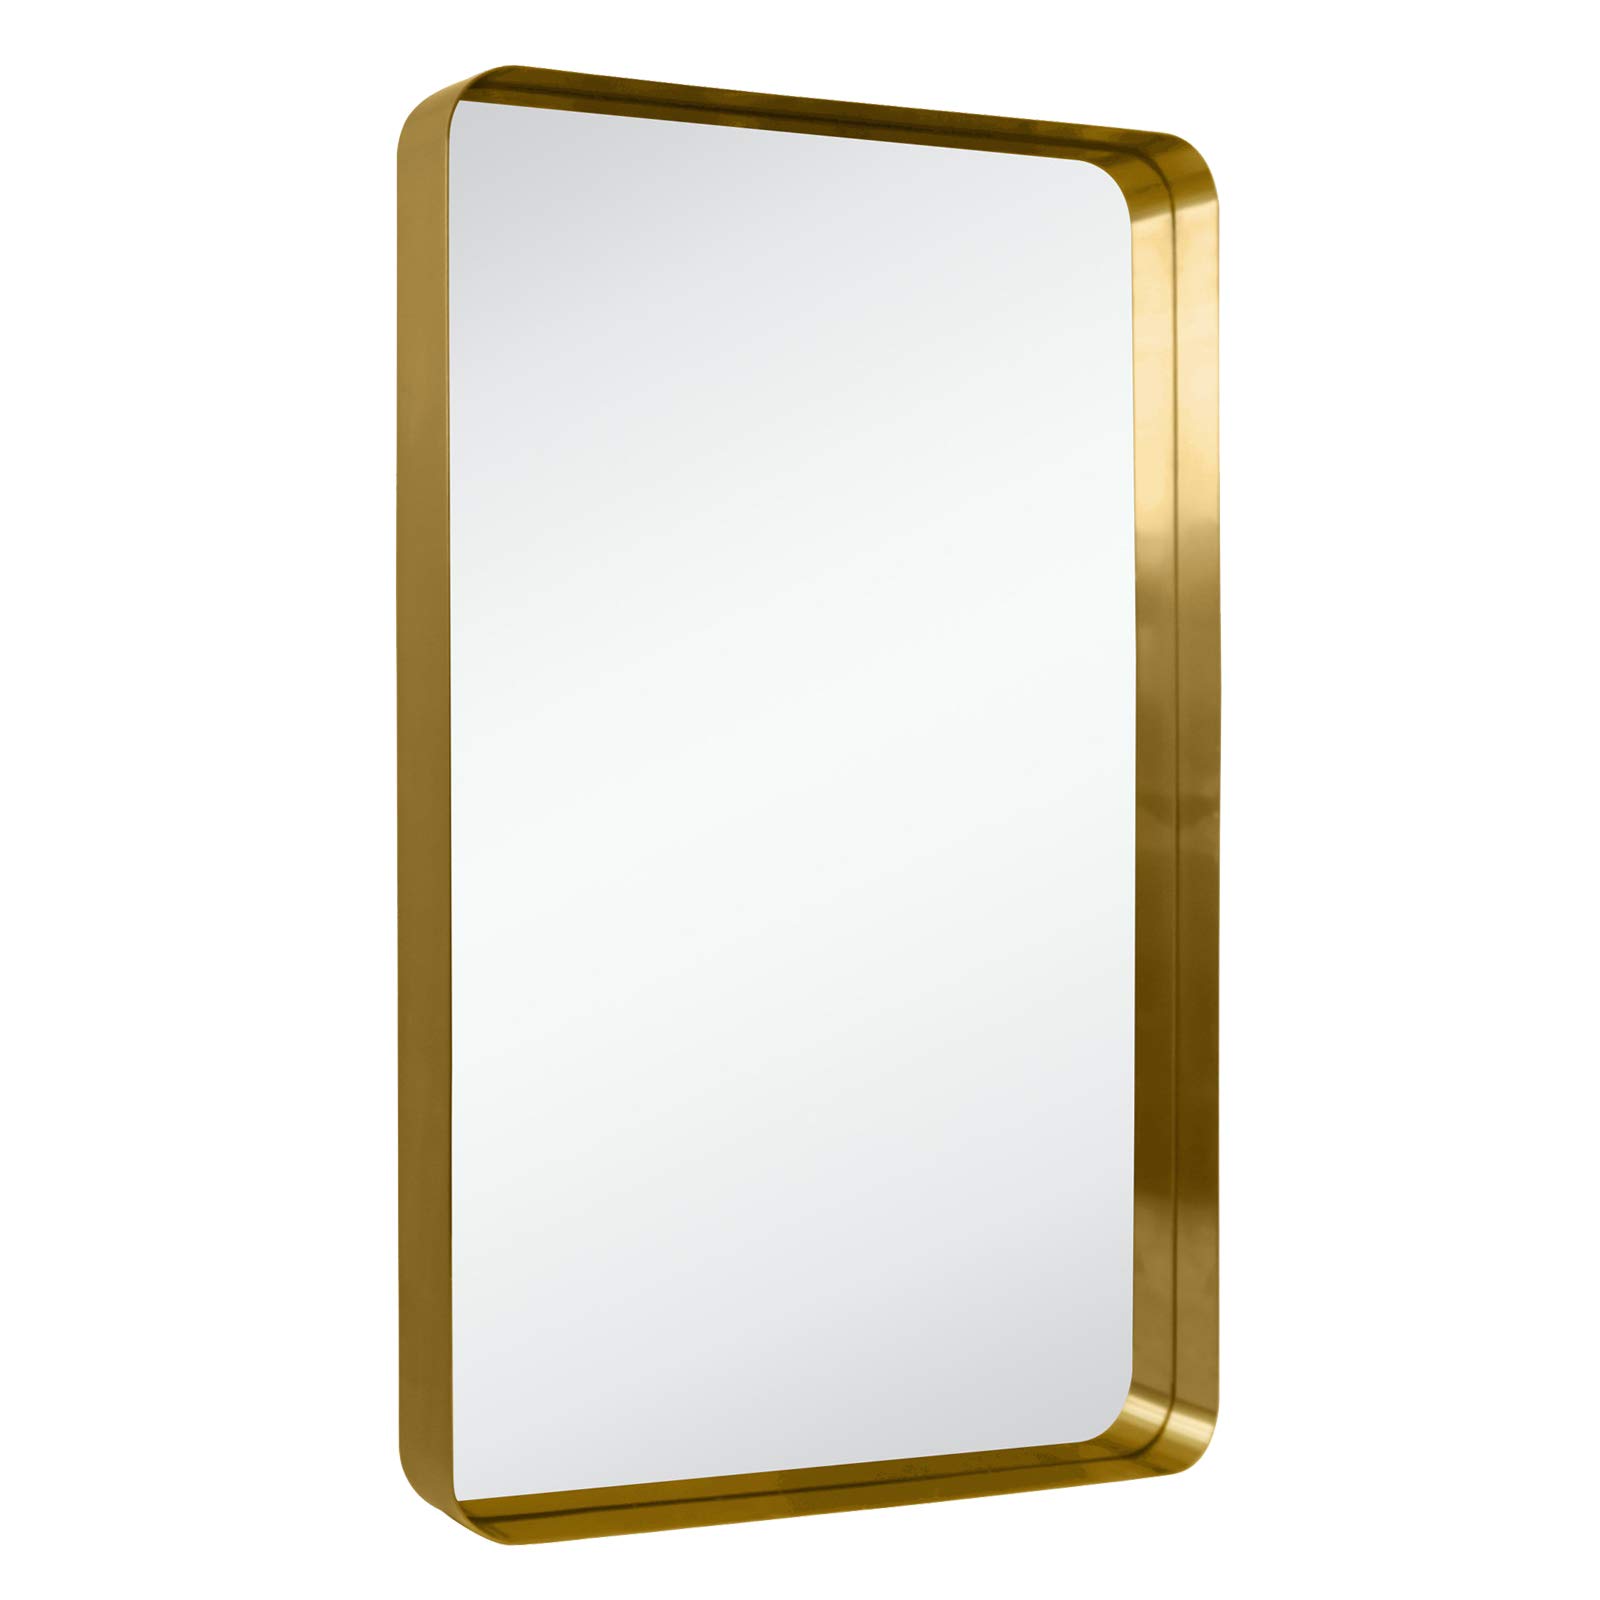 Arthers Stainless Steel Metal Bathroom Vanity Wall Mirror-24x36-Brushed Gold